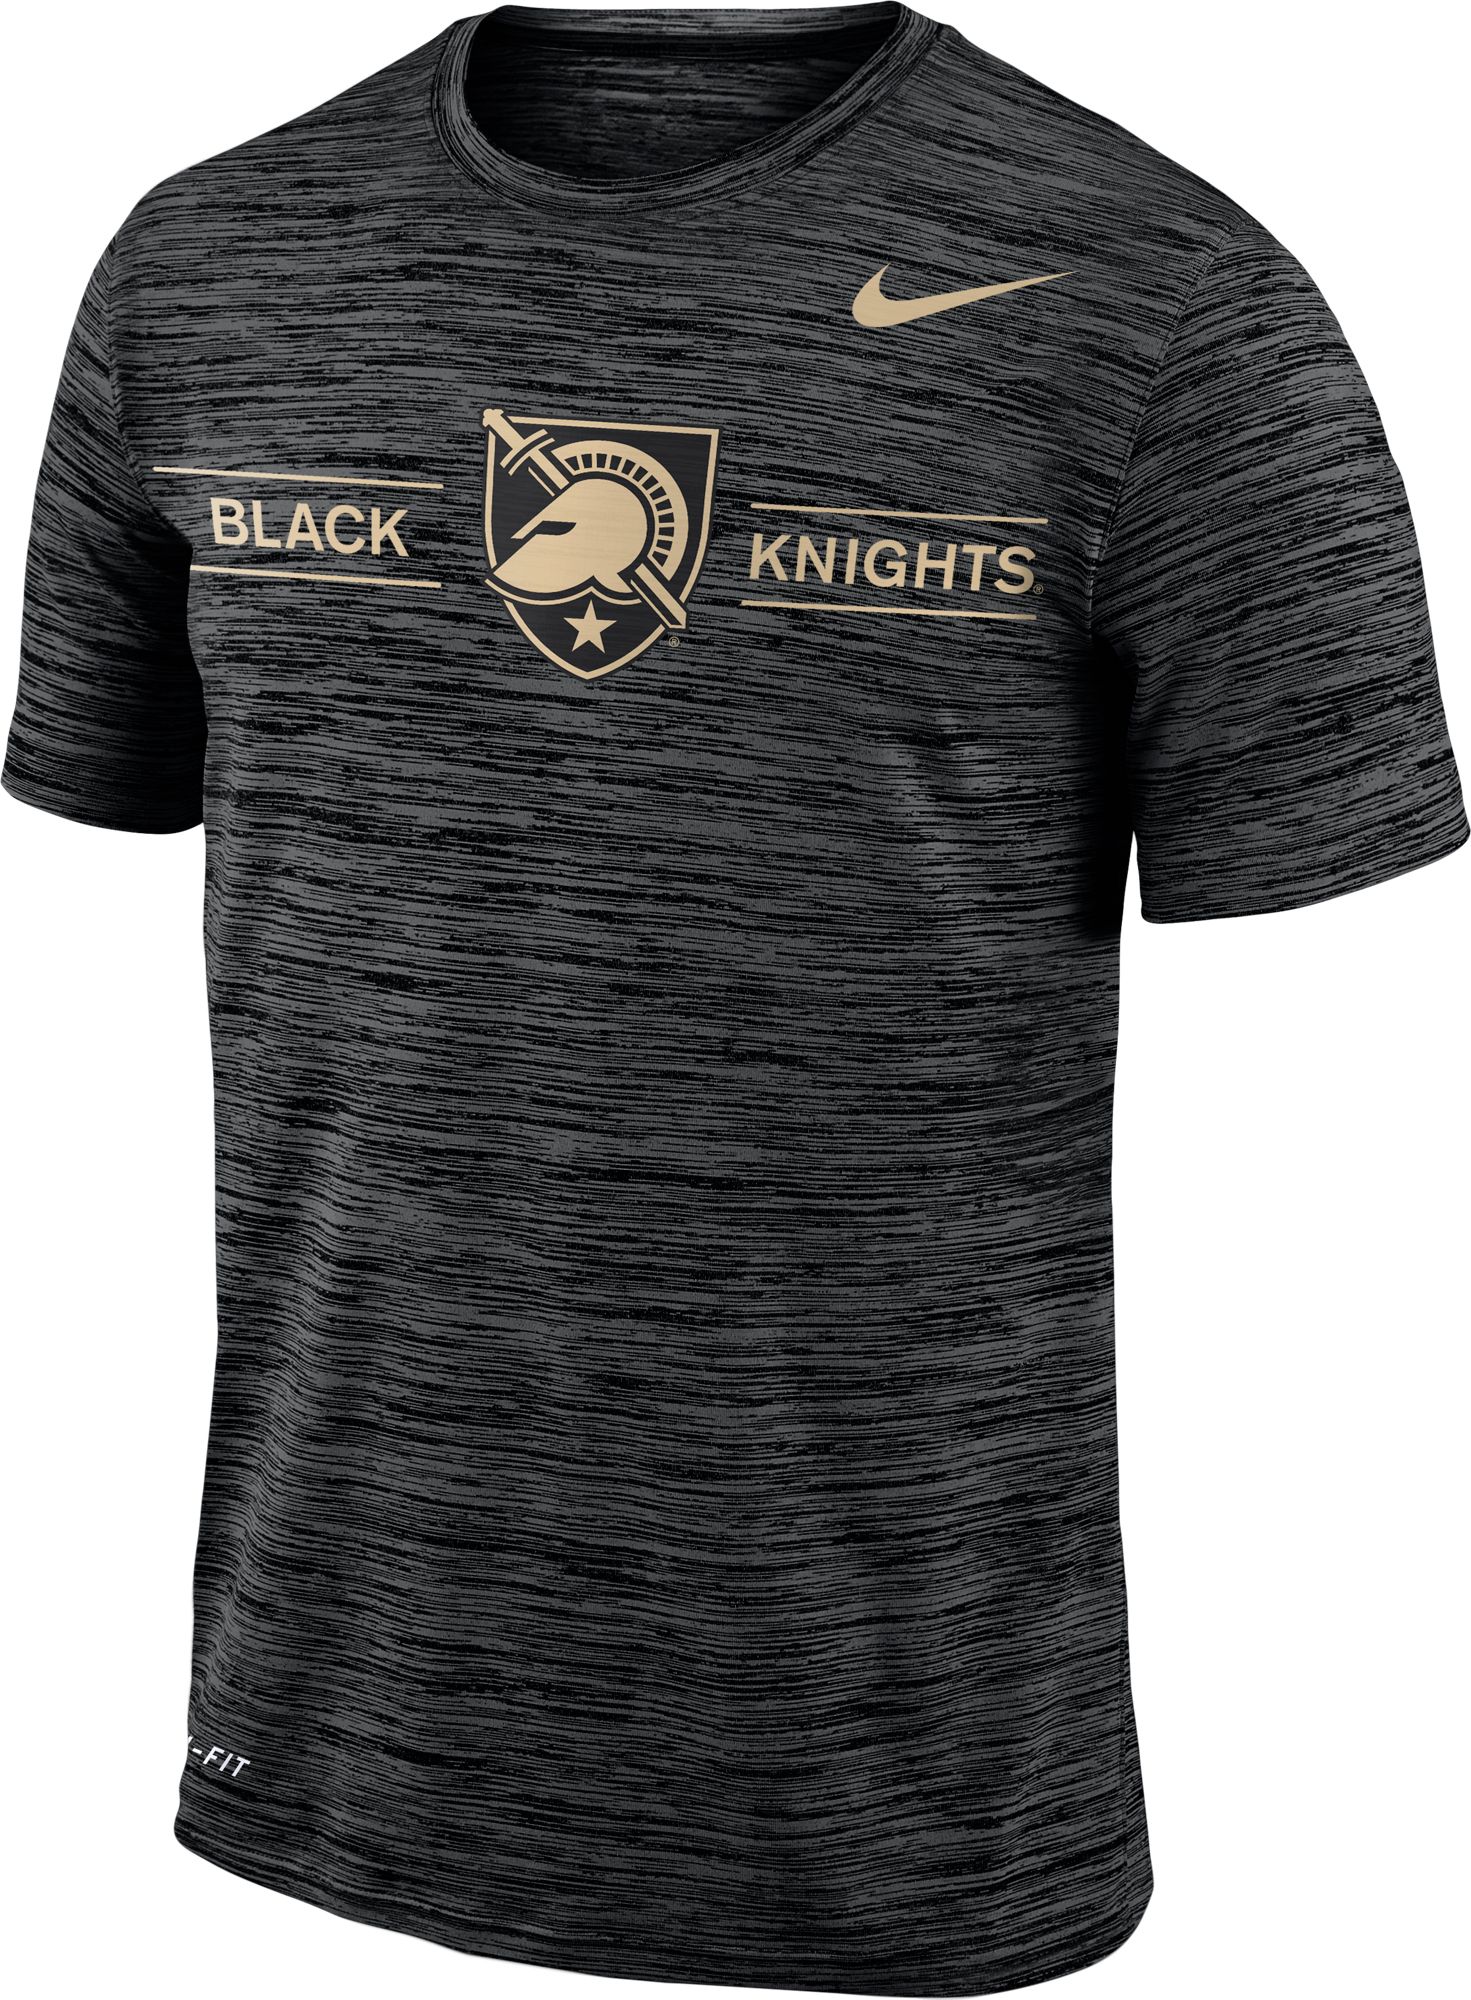 army black knights football jersey